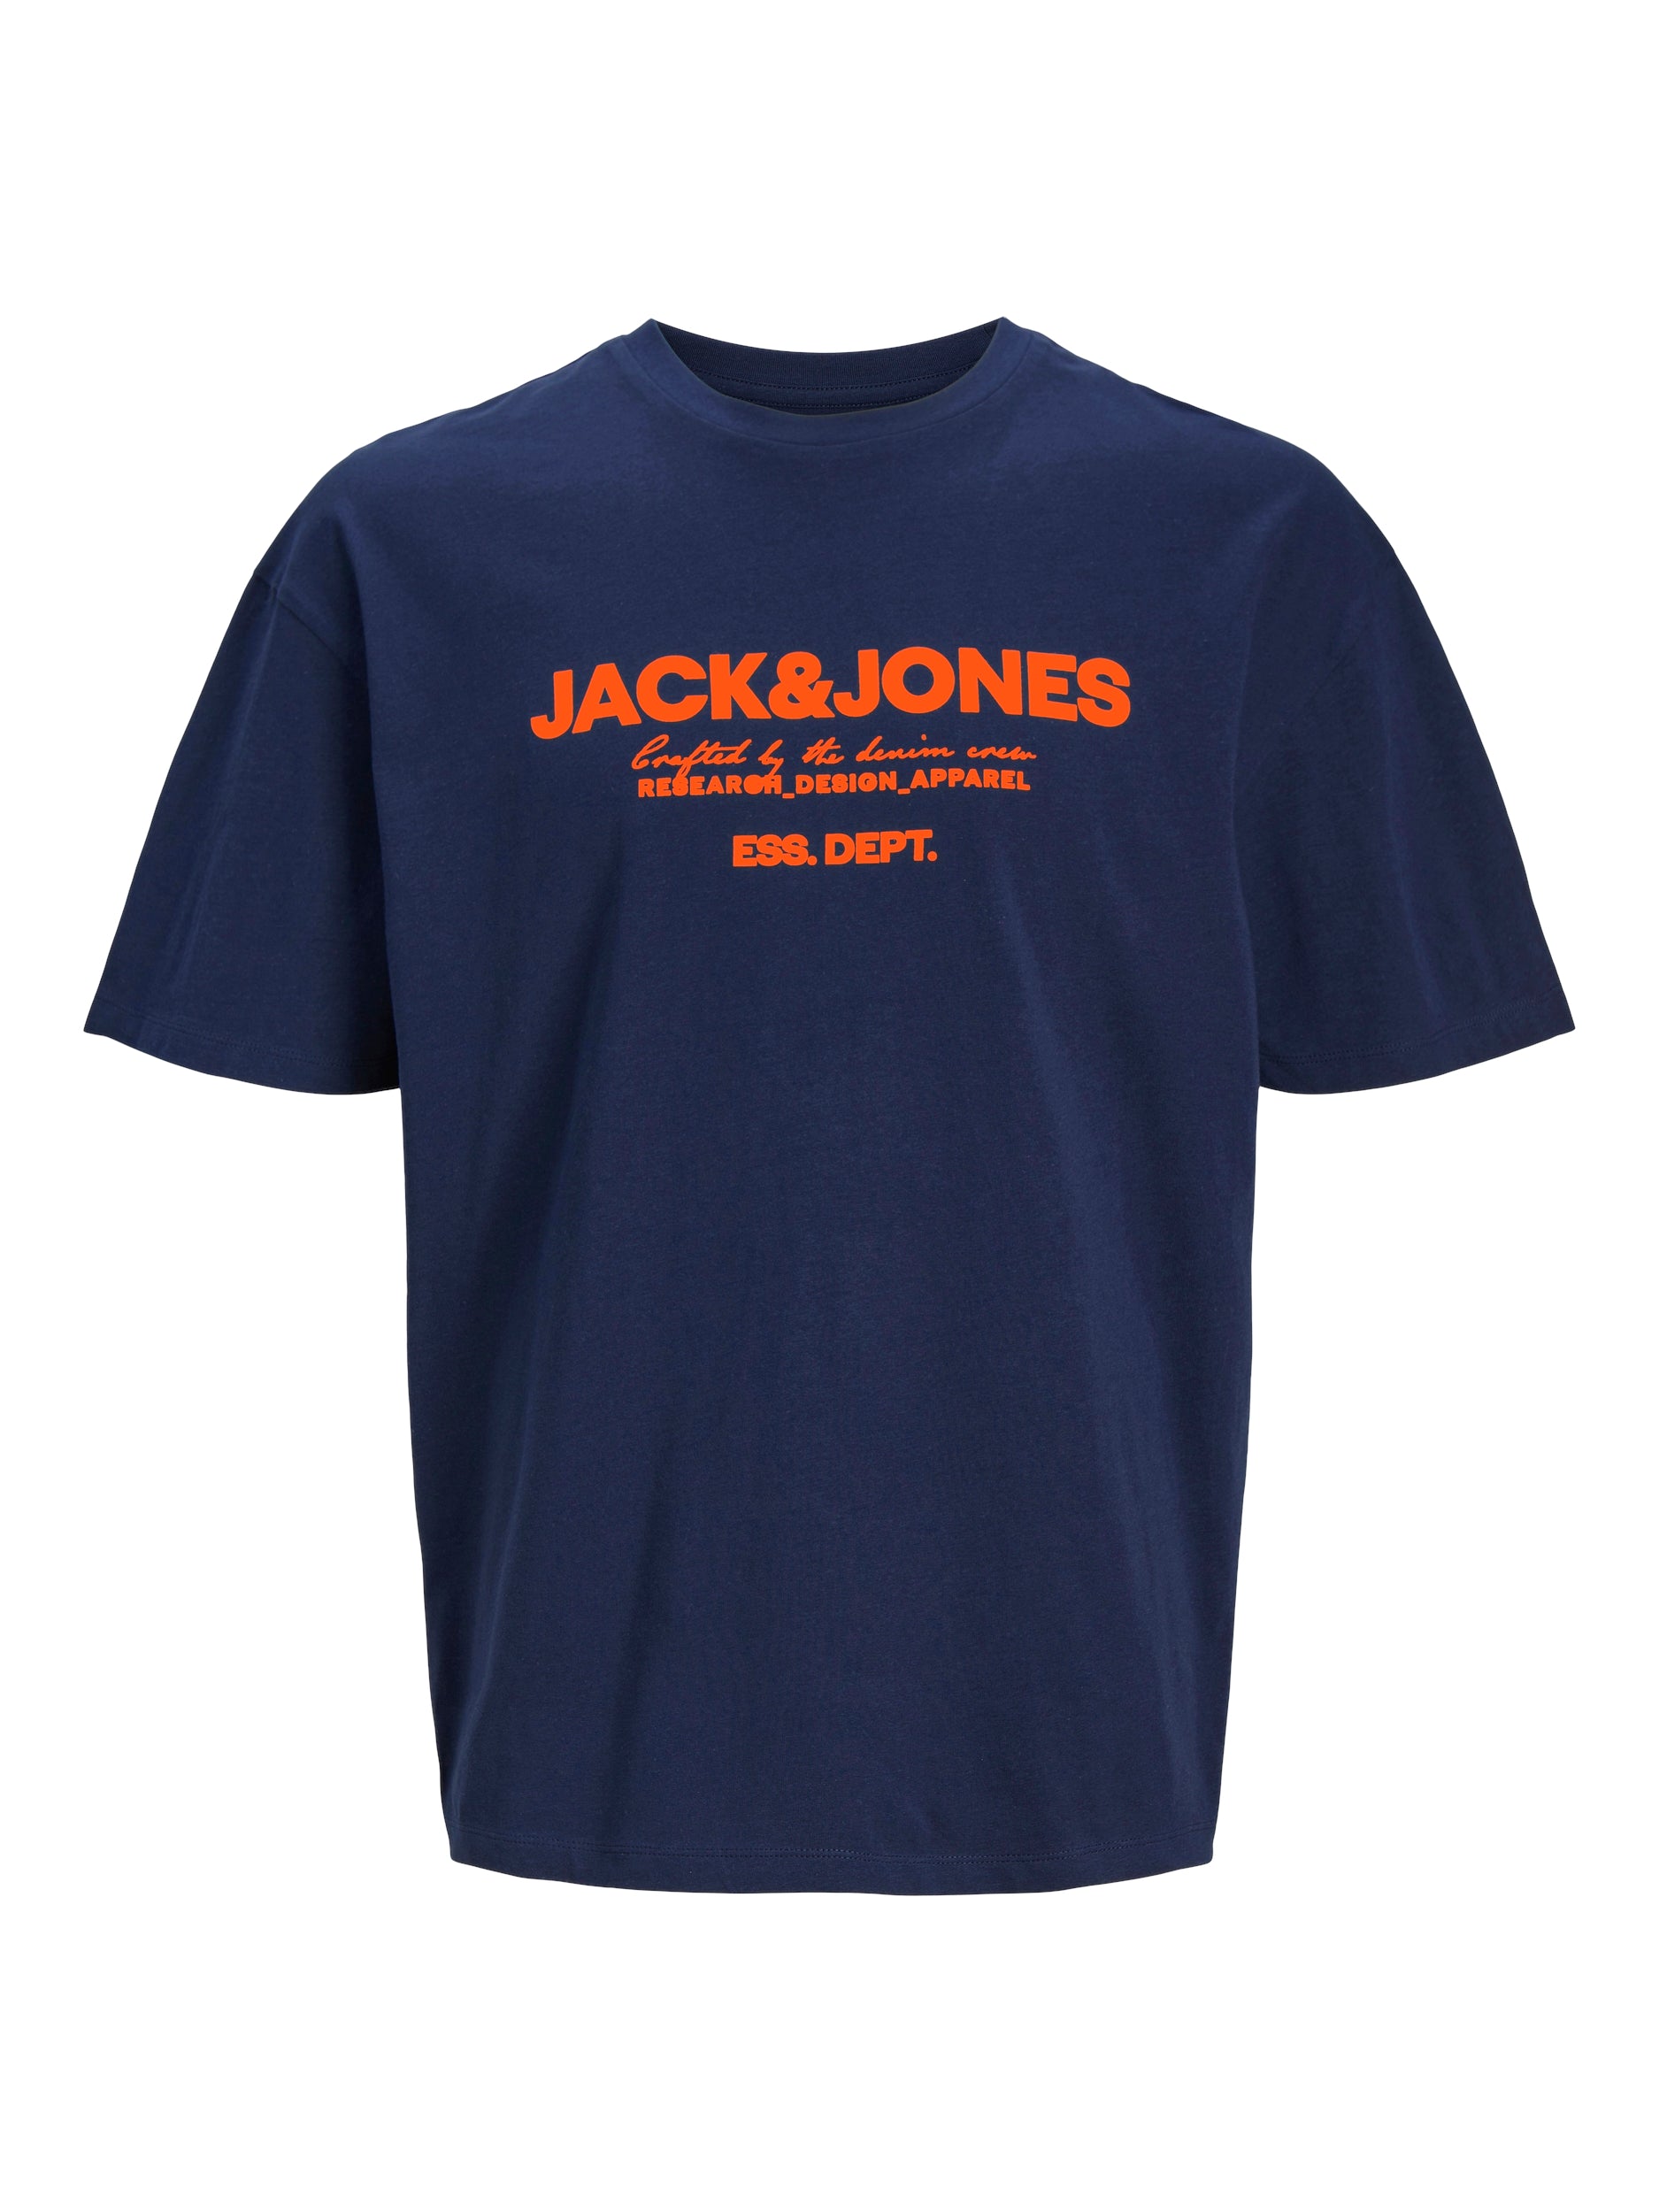 Jack & Jones Gale Tee Pacific Sky Captain Navy - Raw Menswear